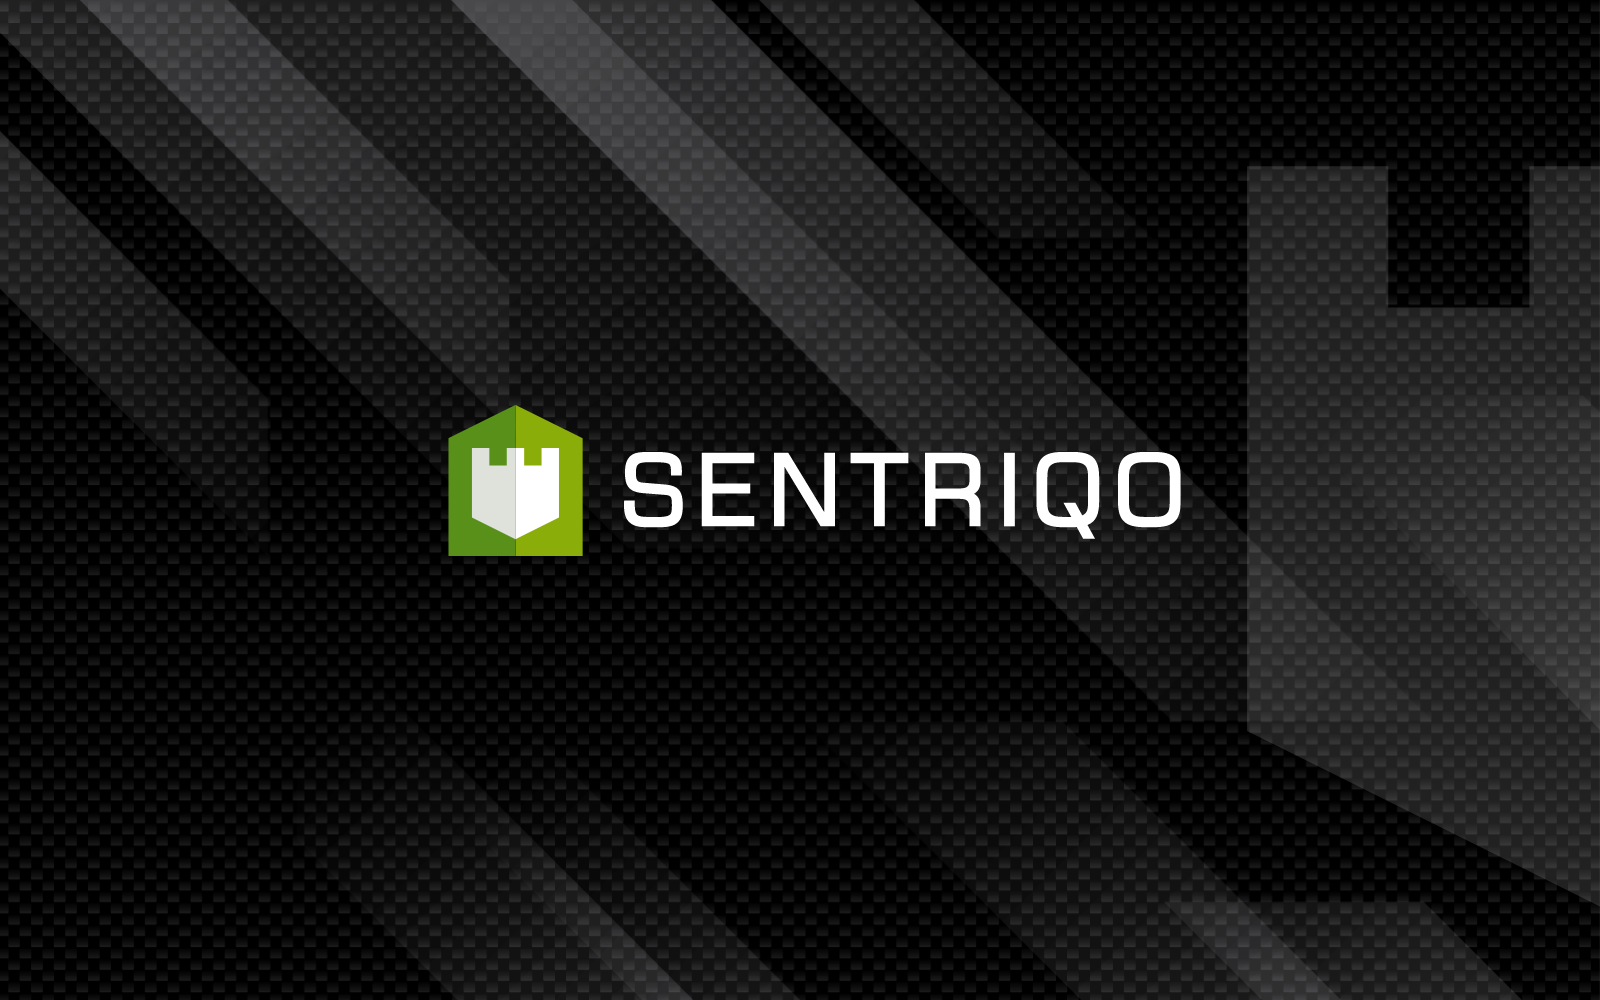 Sentriqo Image